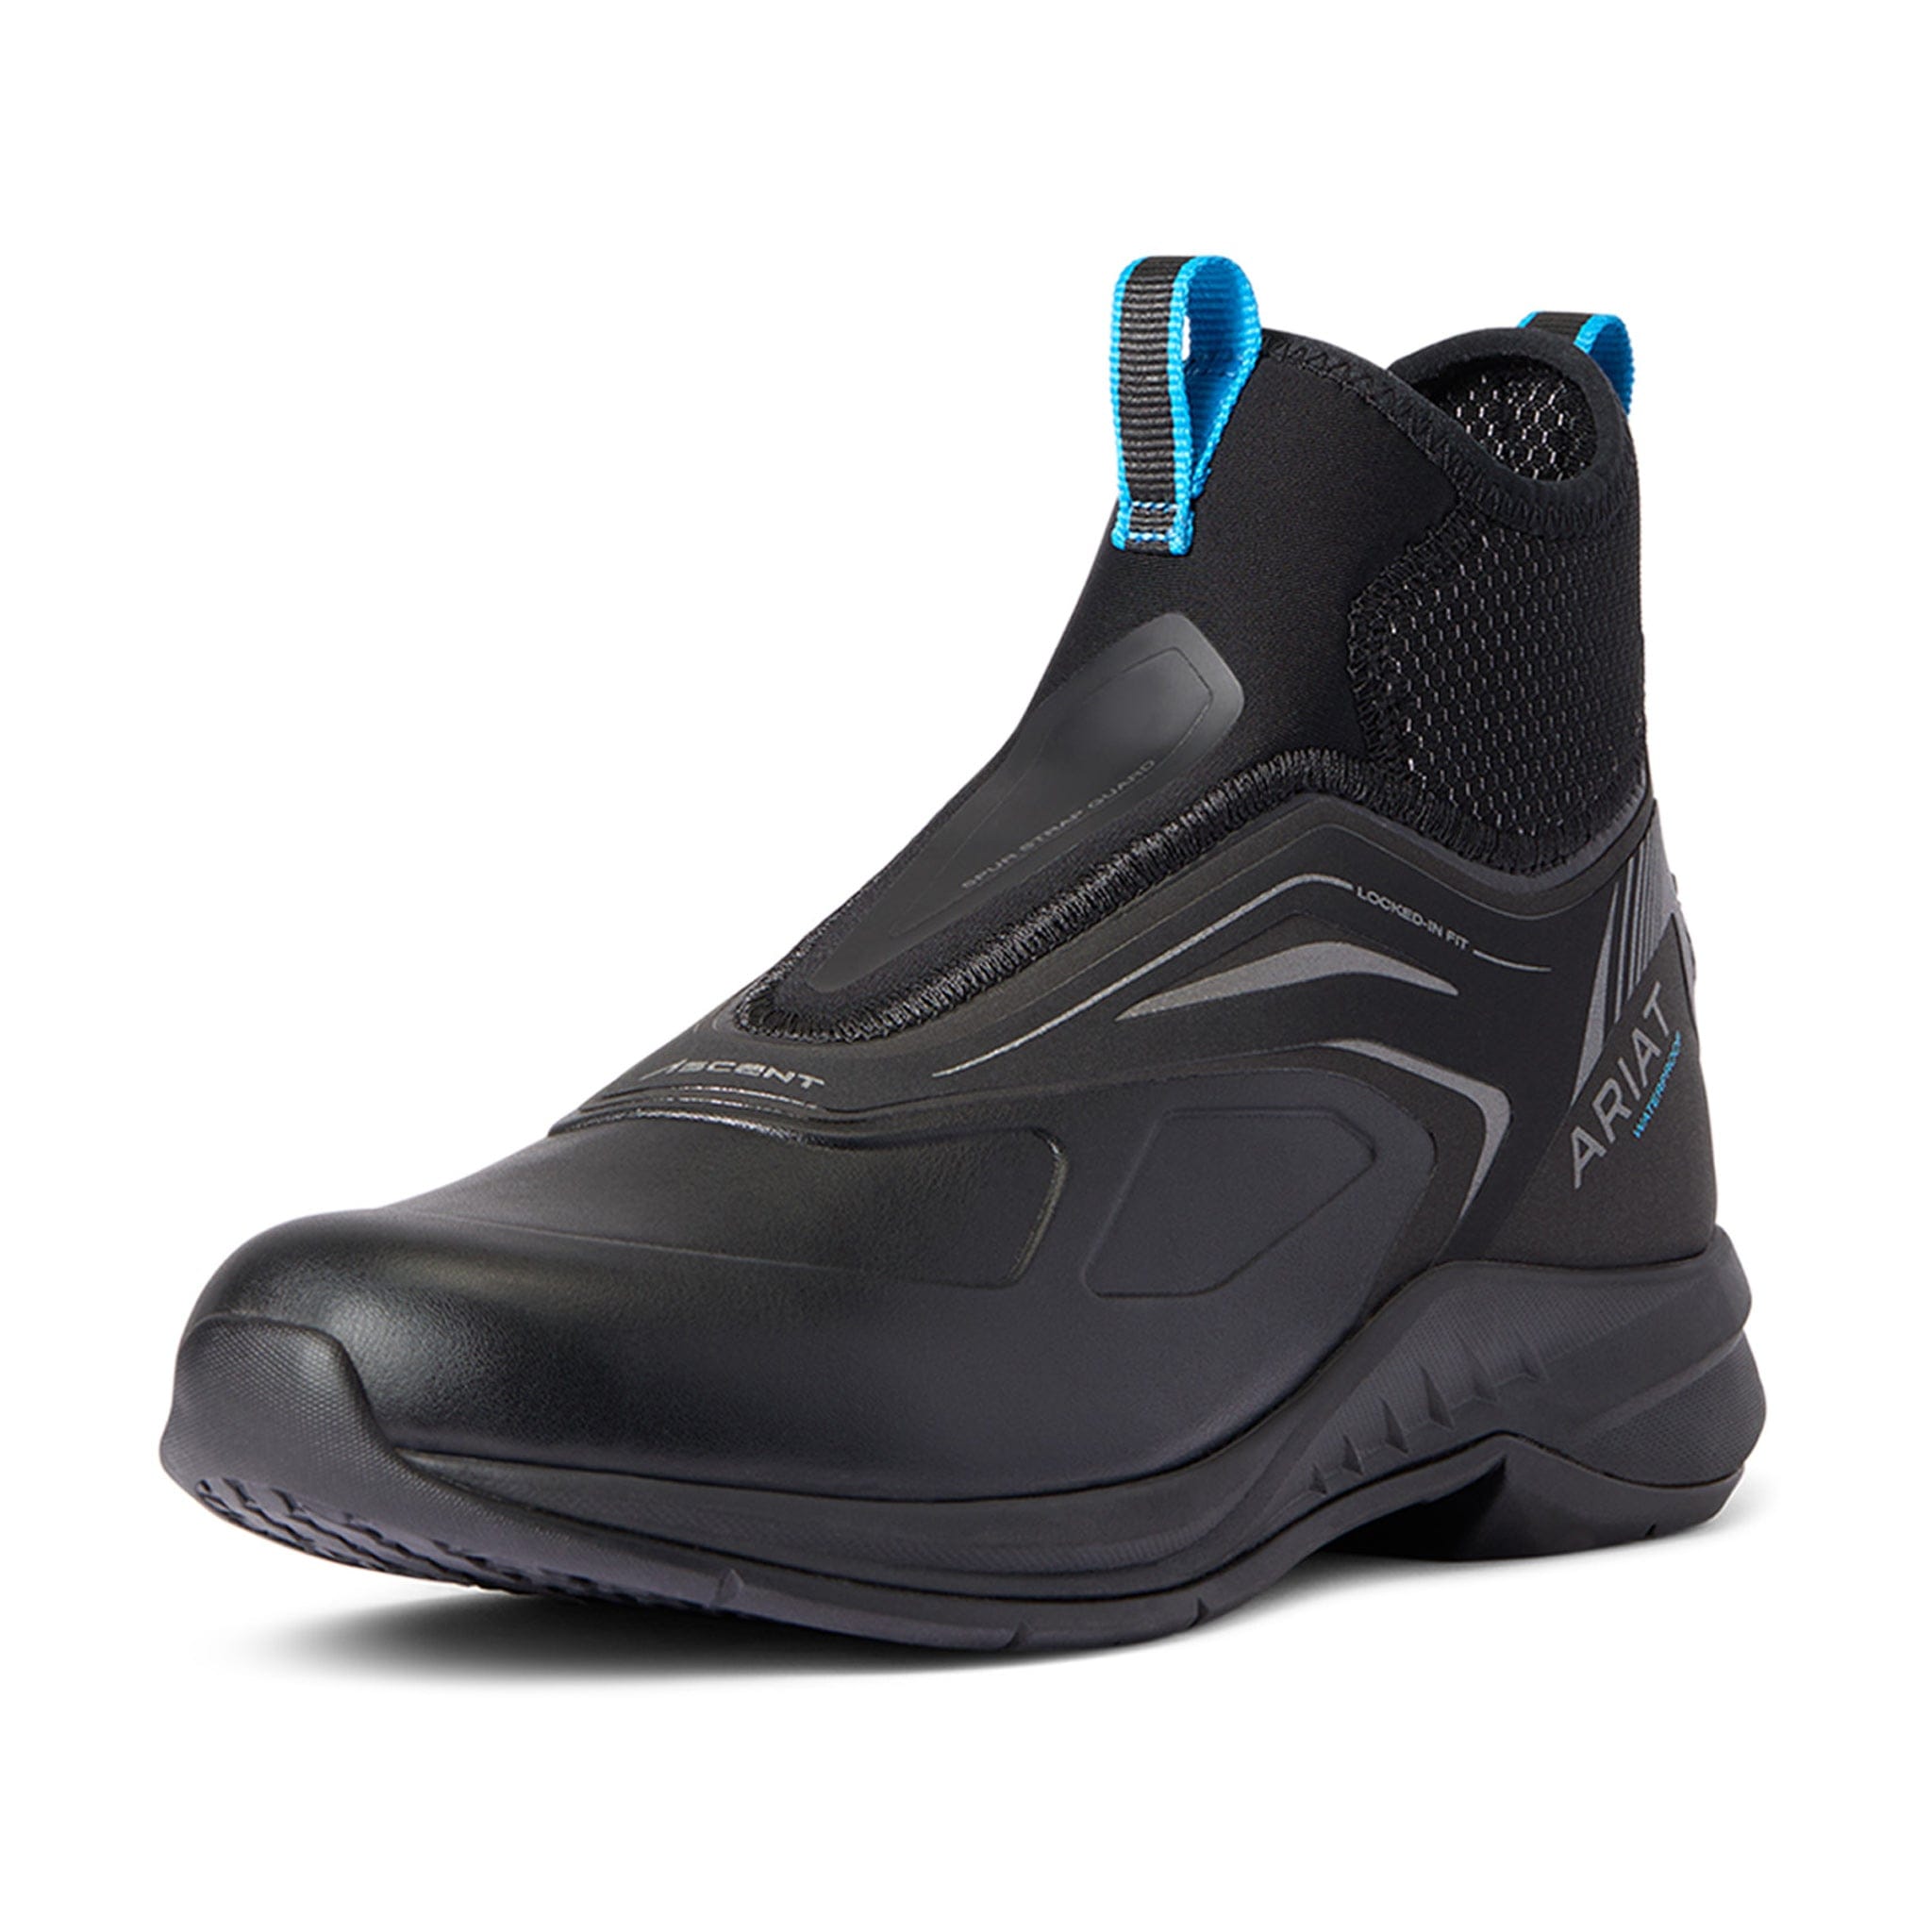 Ariat Ascent H2O Paddock Boots 10038285 Black